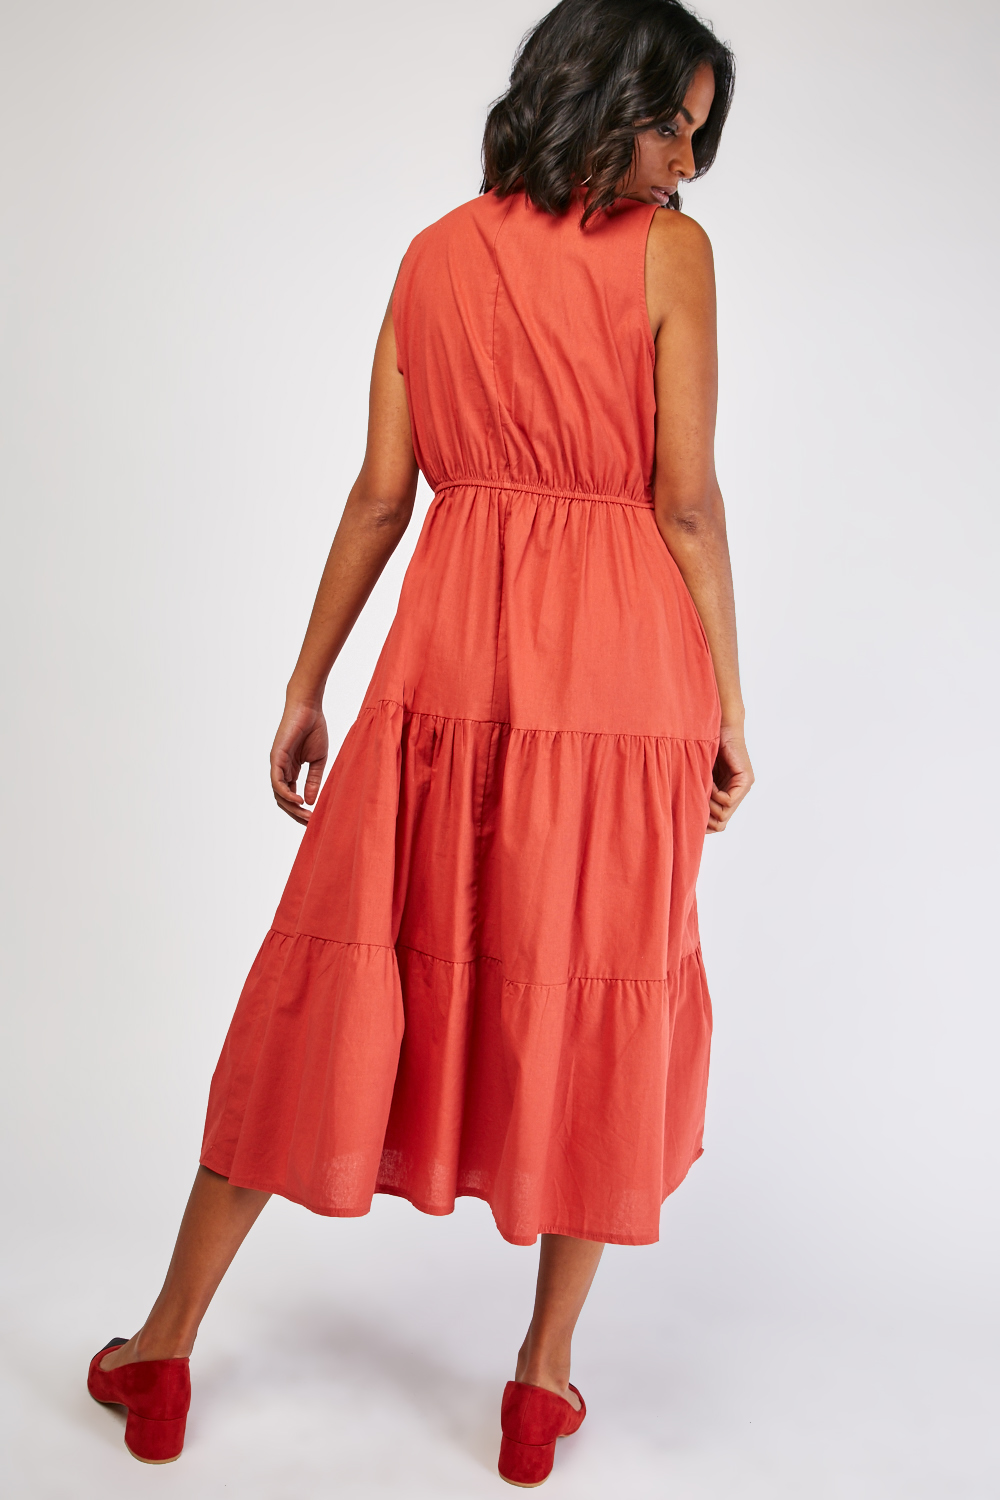 Sleeveless Midi Tiered Dress - Just $7